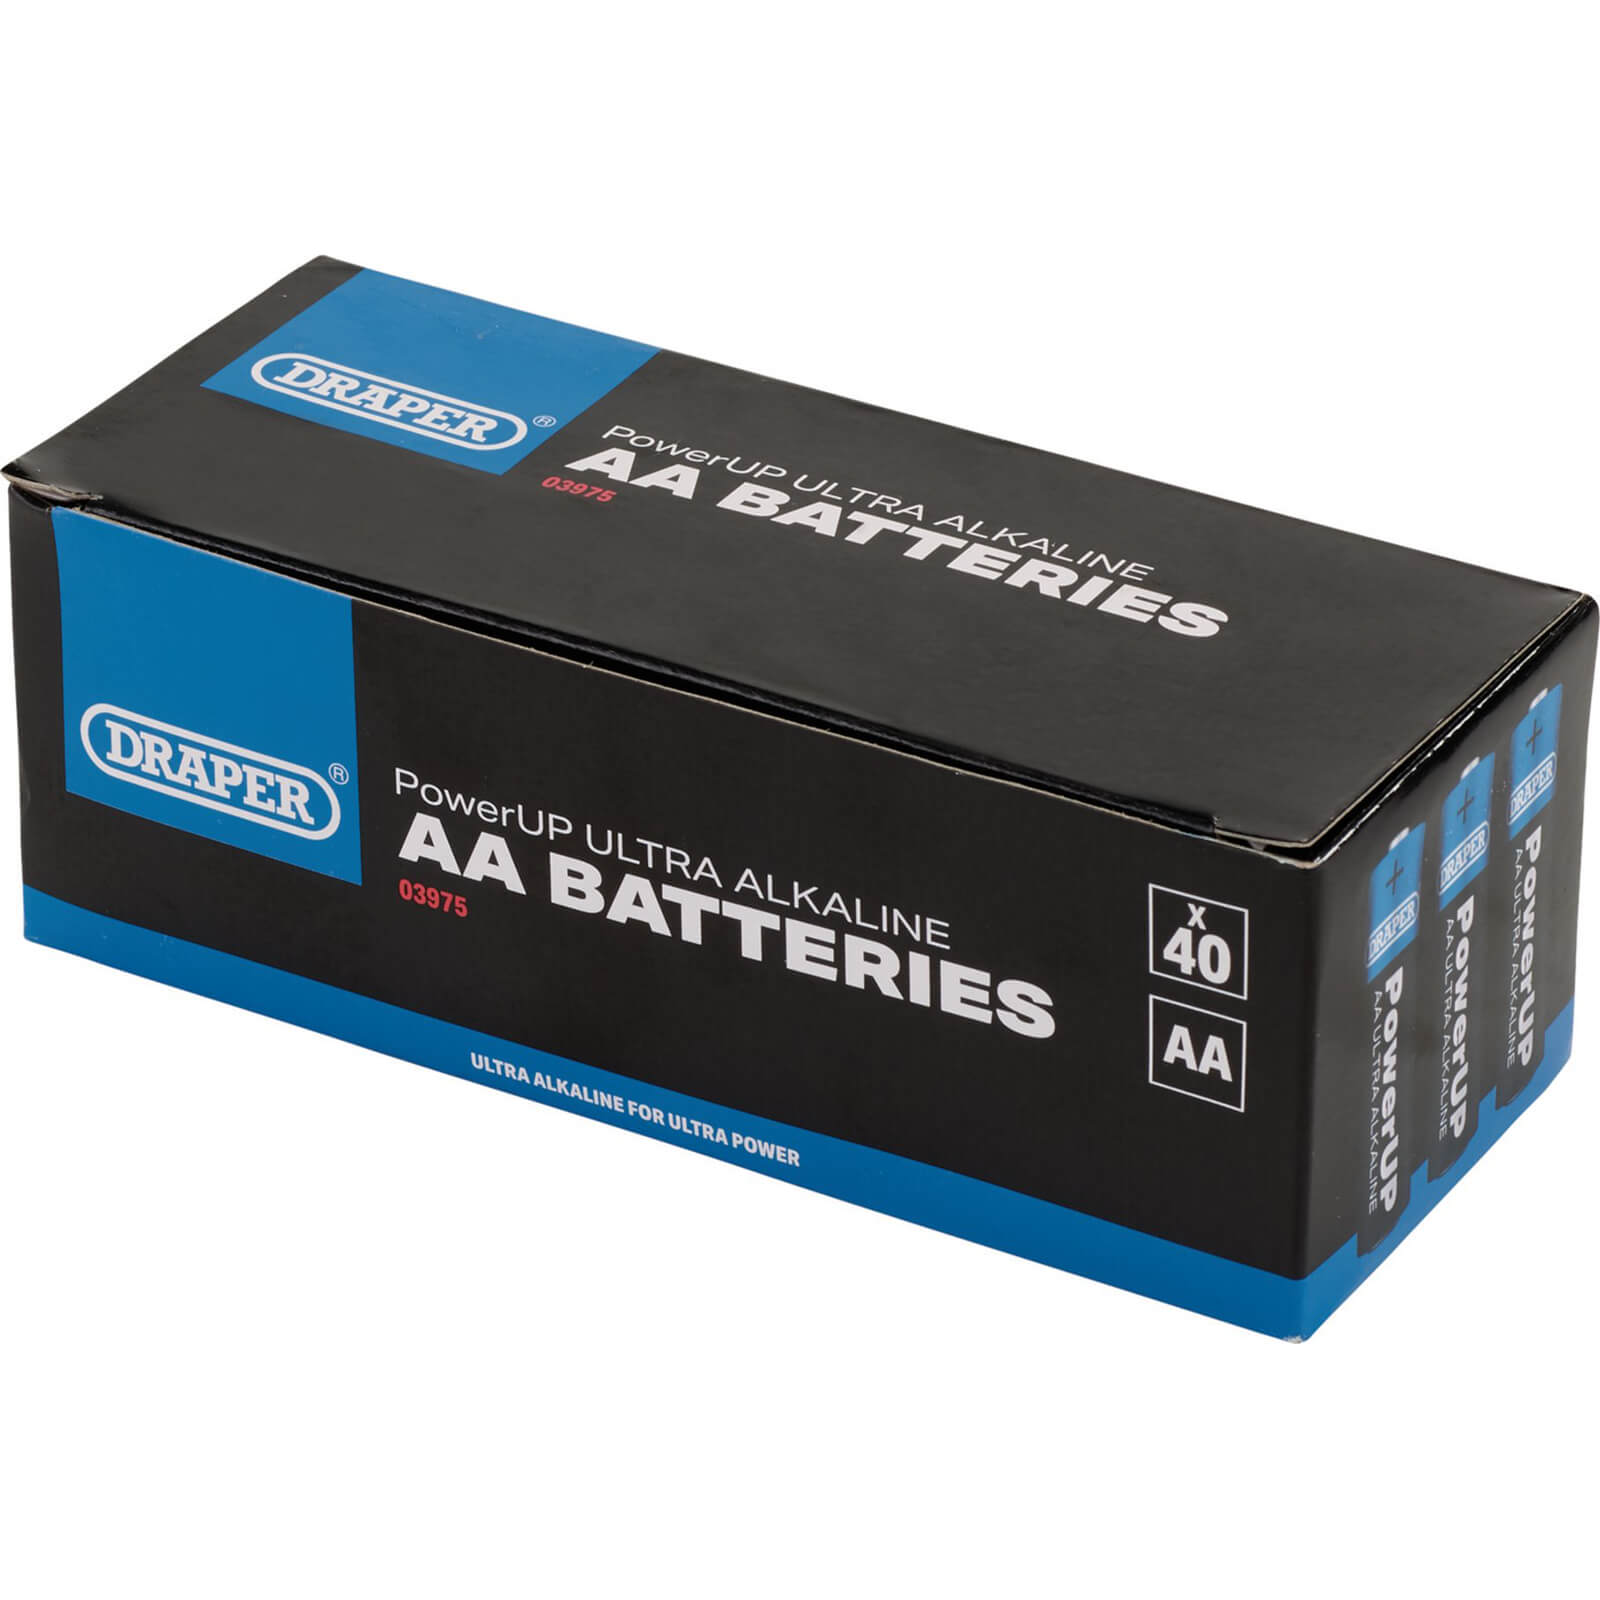 Image of Draper Powerup Ultra Alkaline AA Batteries Pack of 40